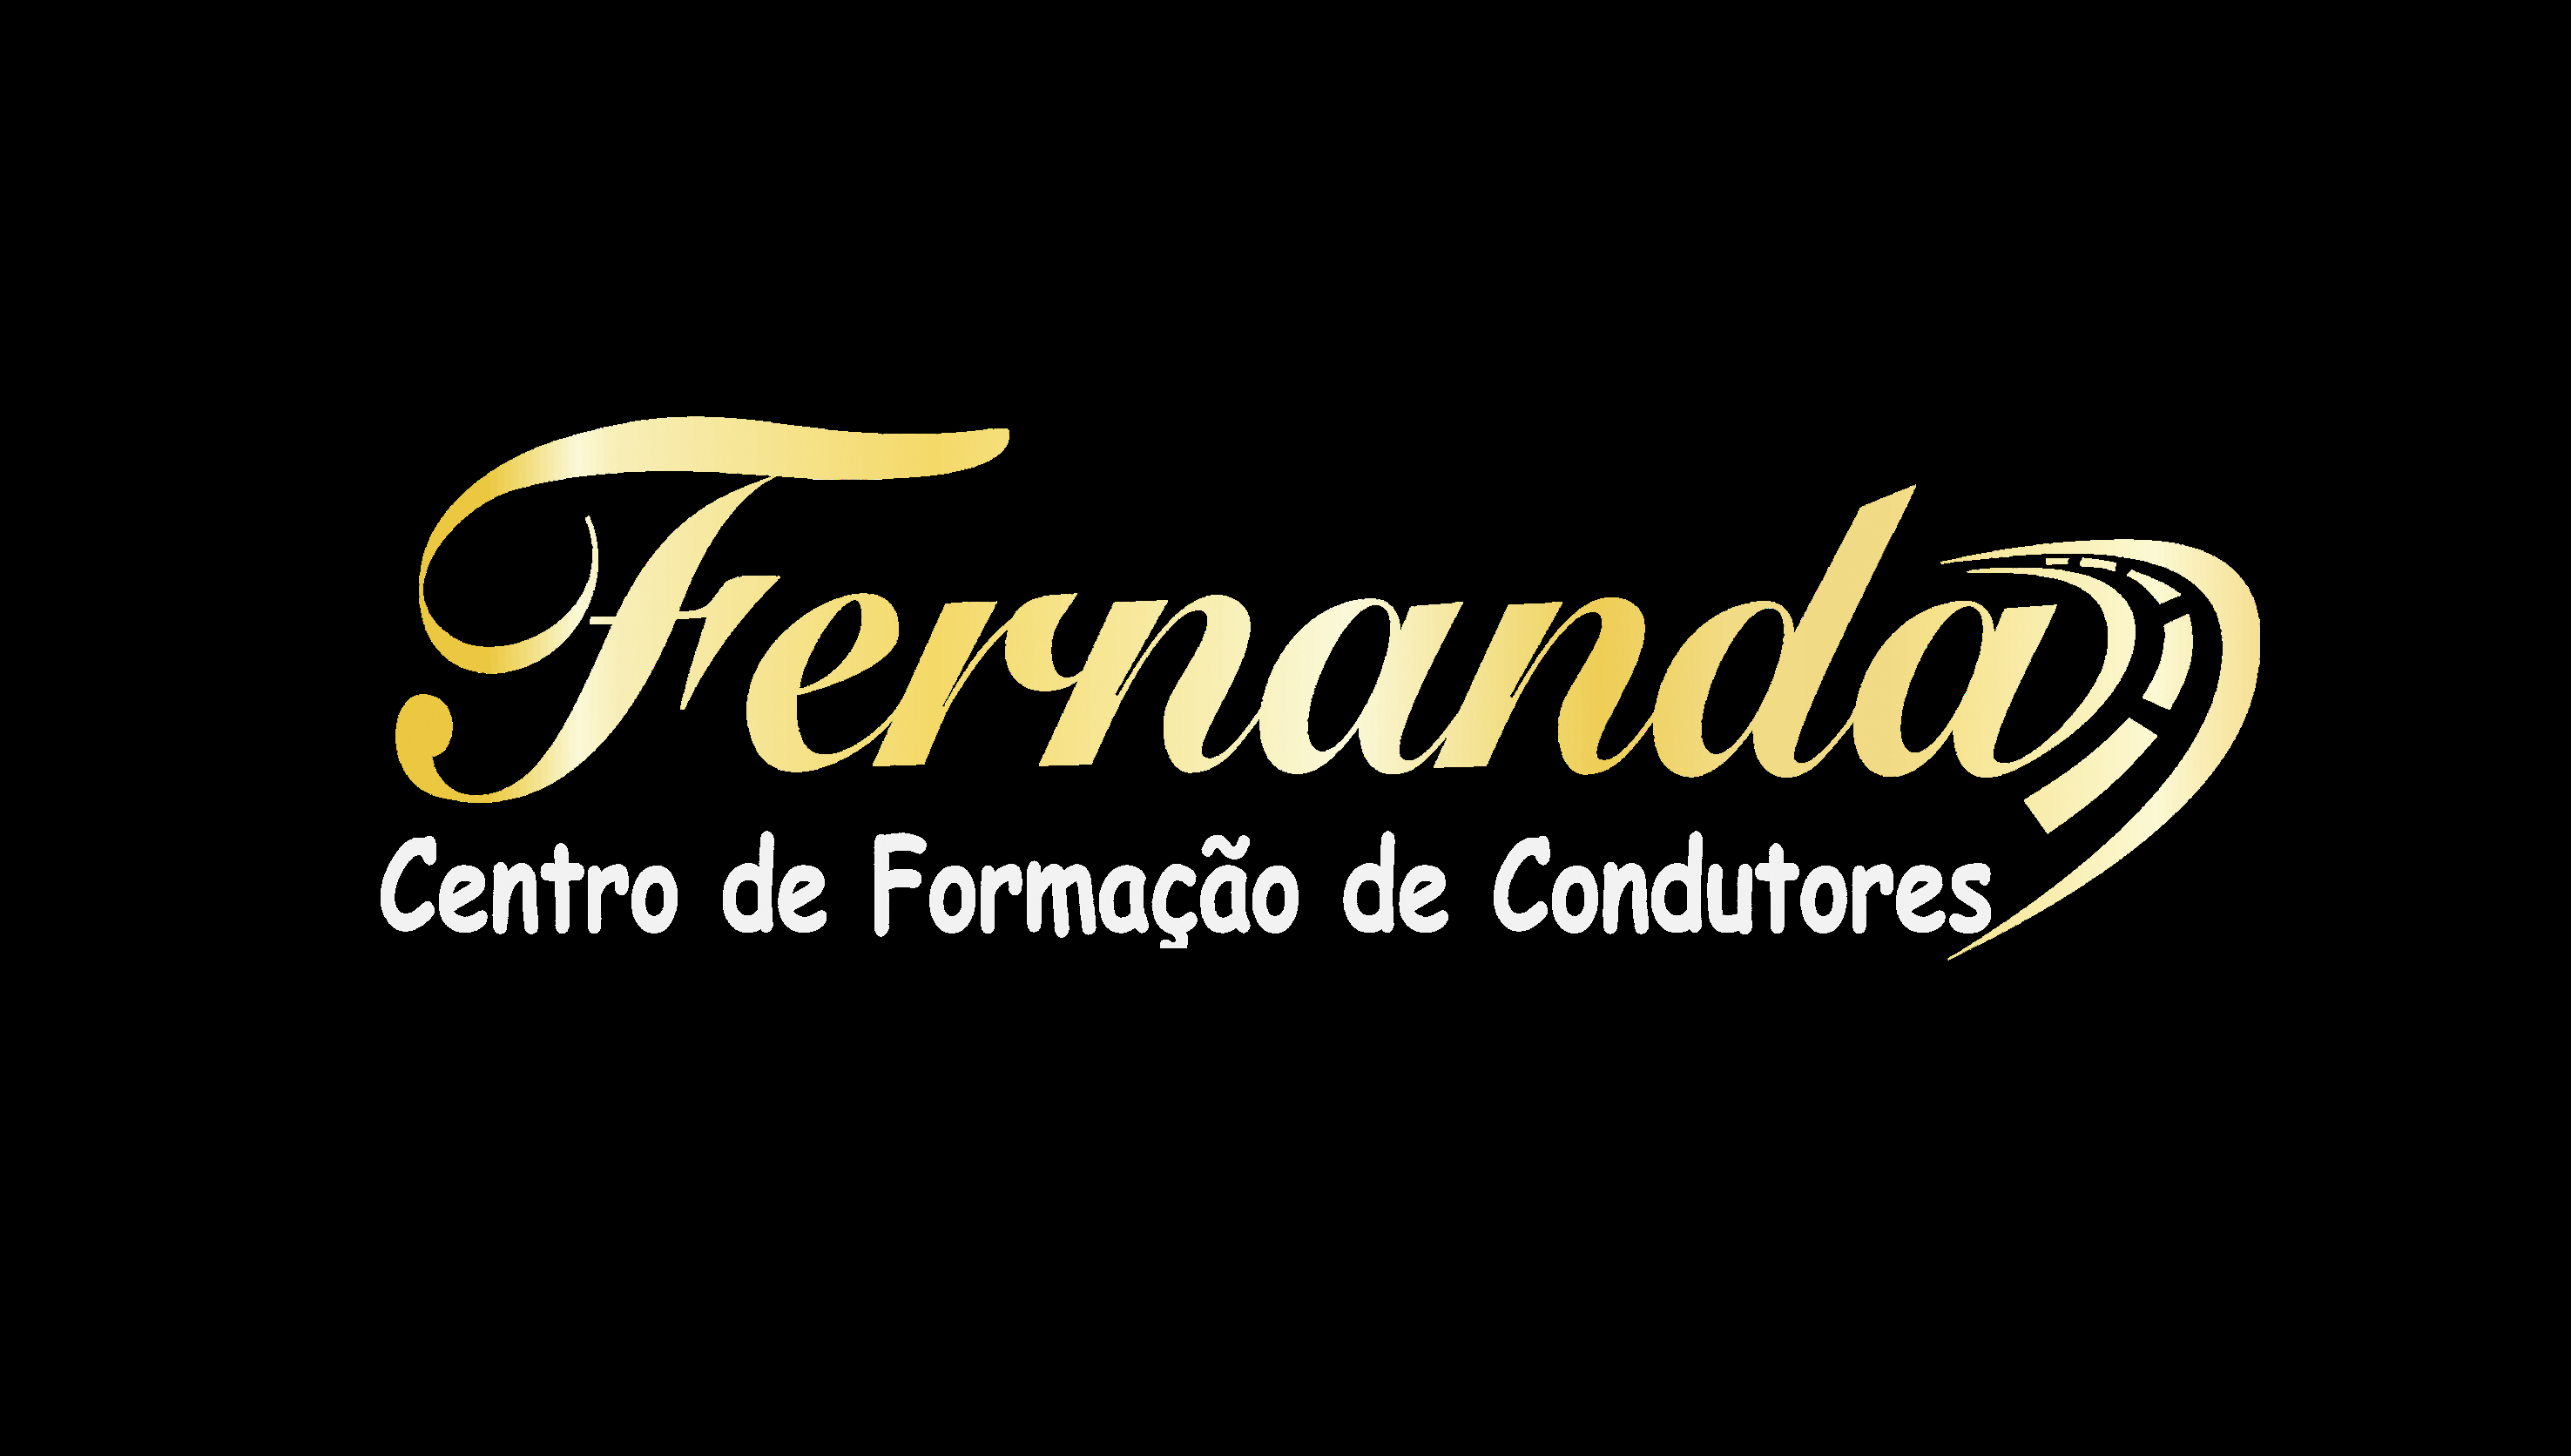 CFC FERNANDA